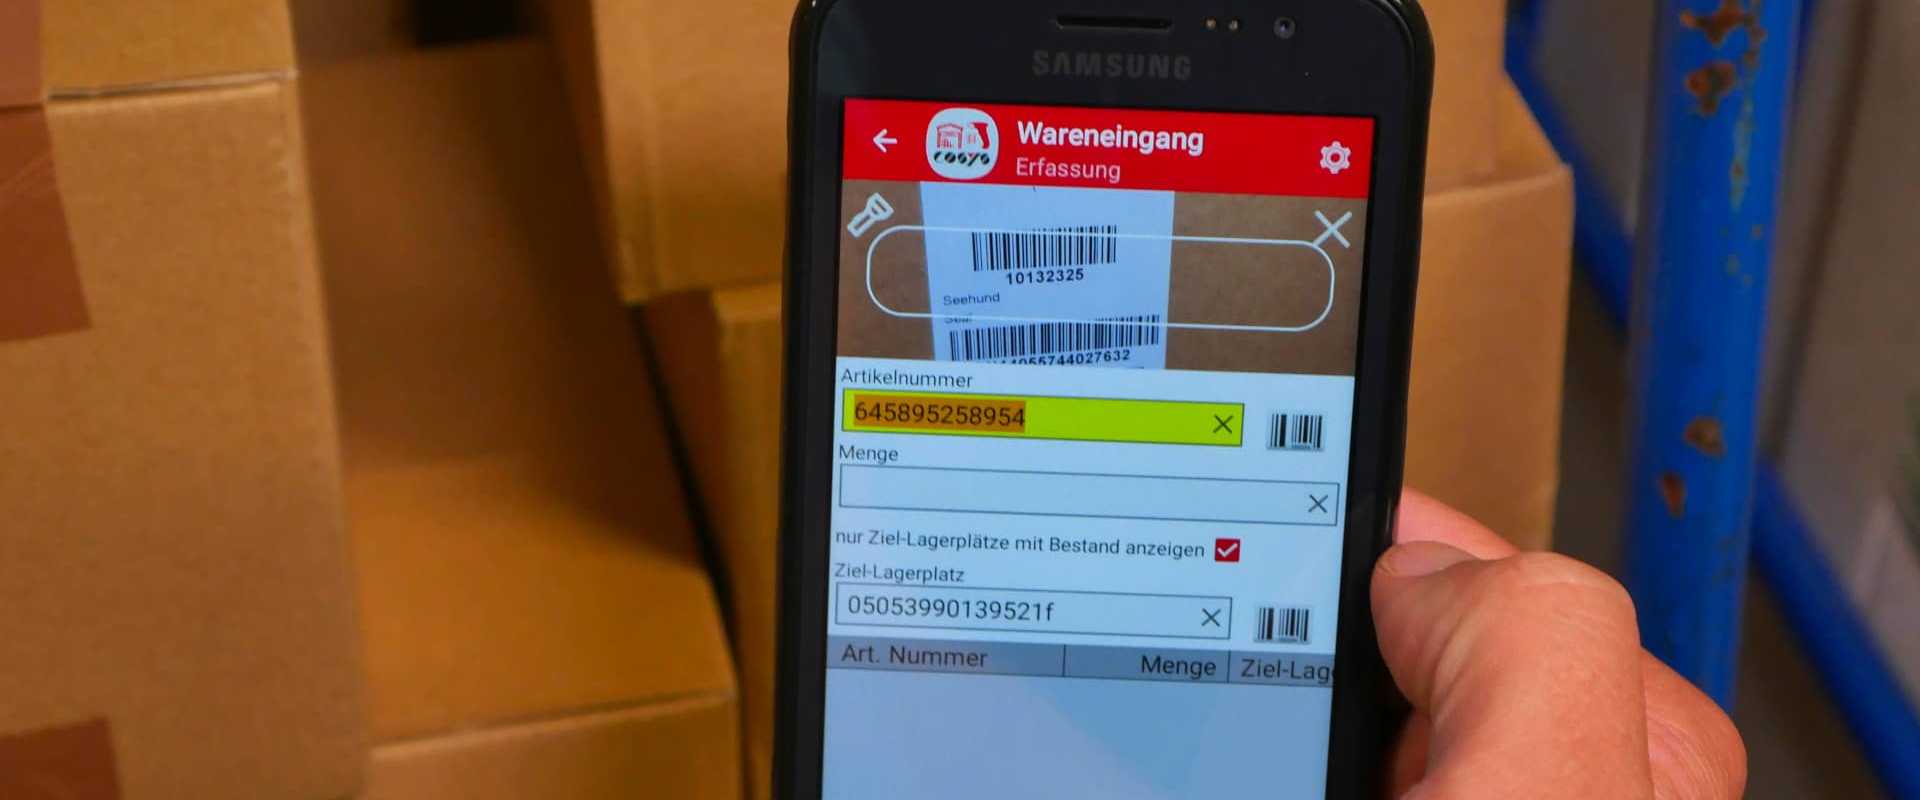 Warehouse Barcode Scanner App